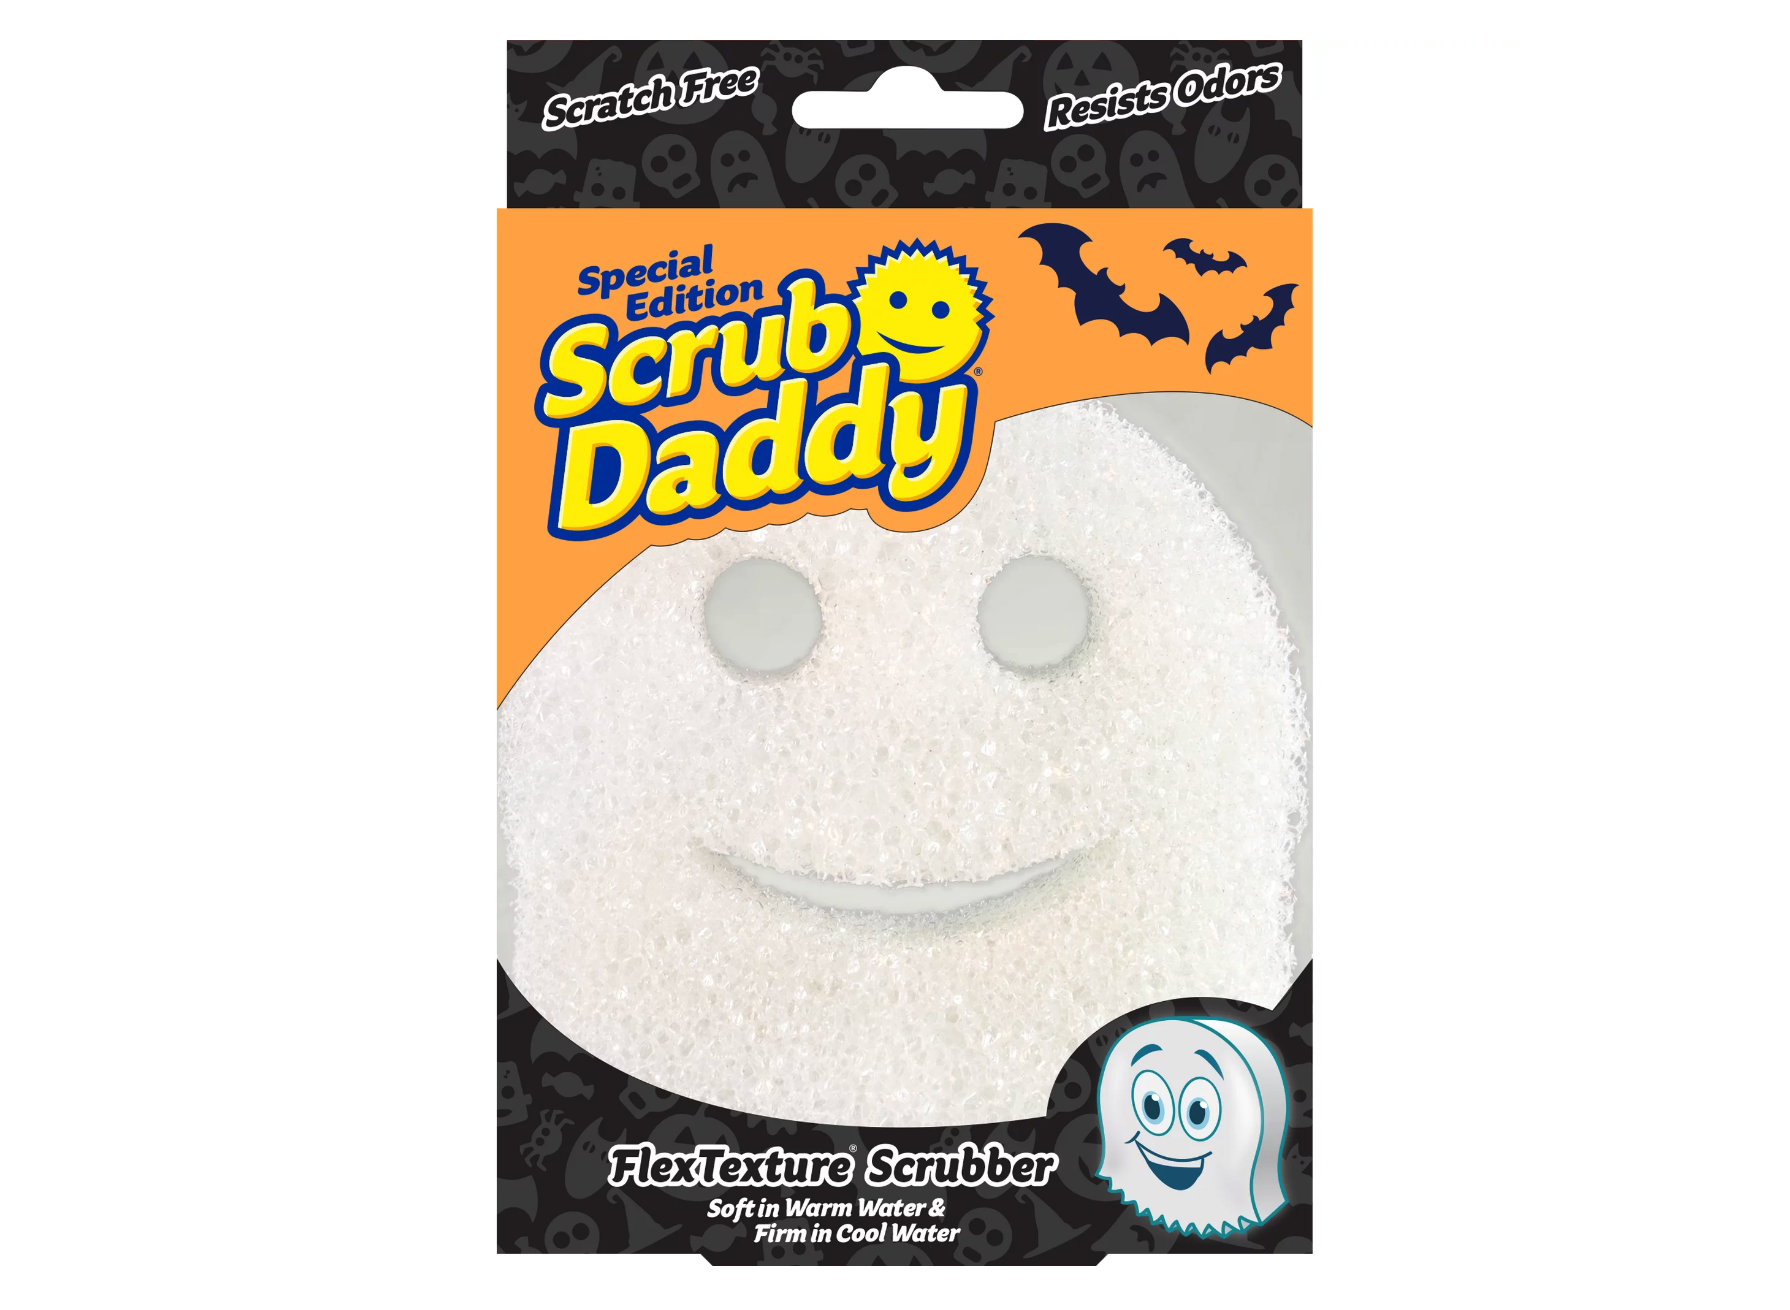 Scrub Daddy Winter Shape White Snowflake, 1 Count